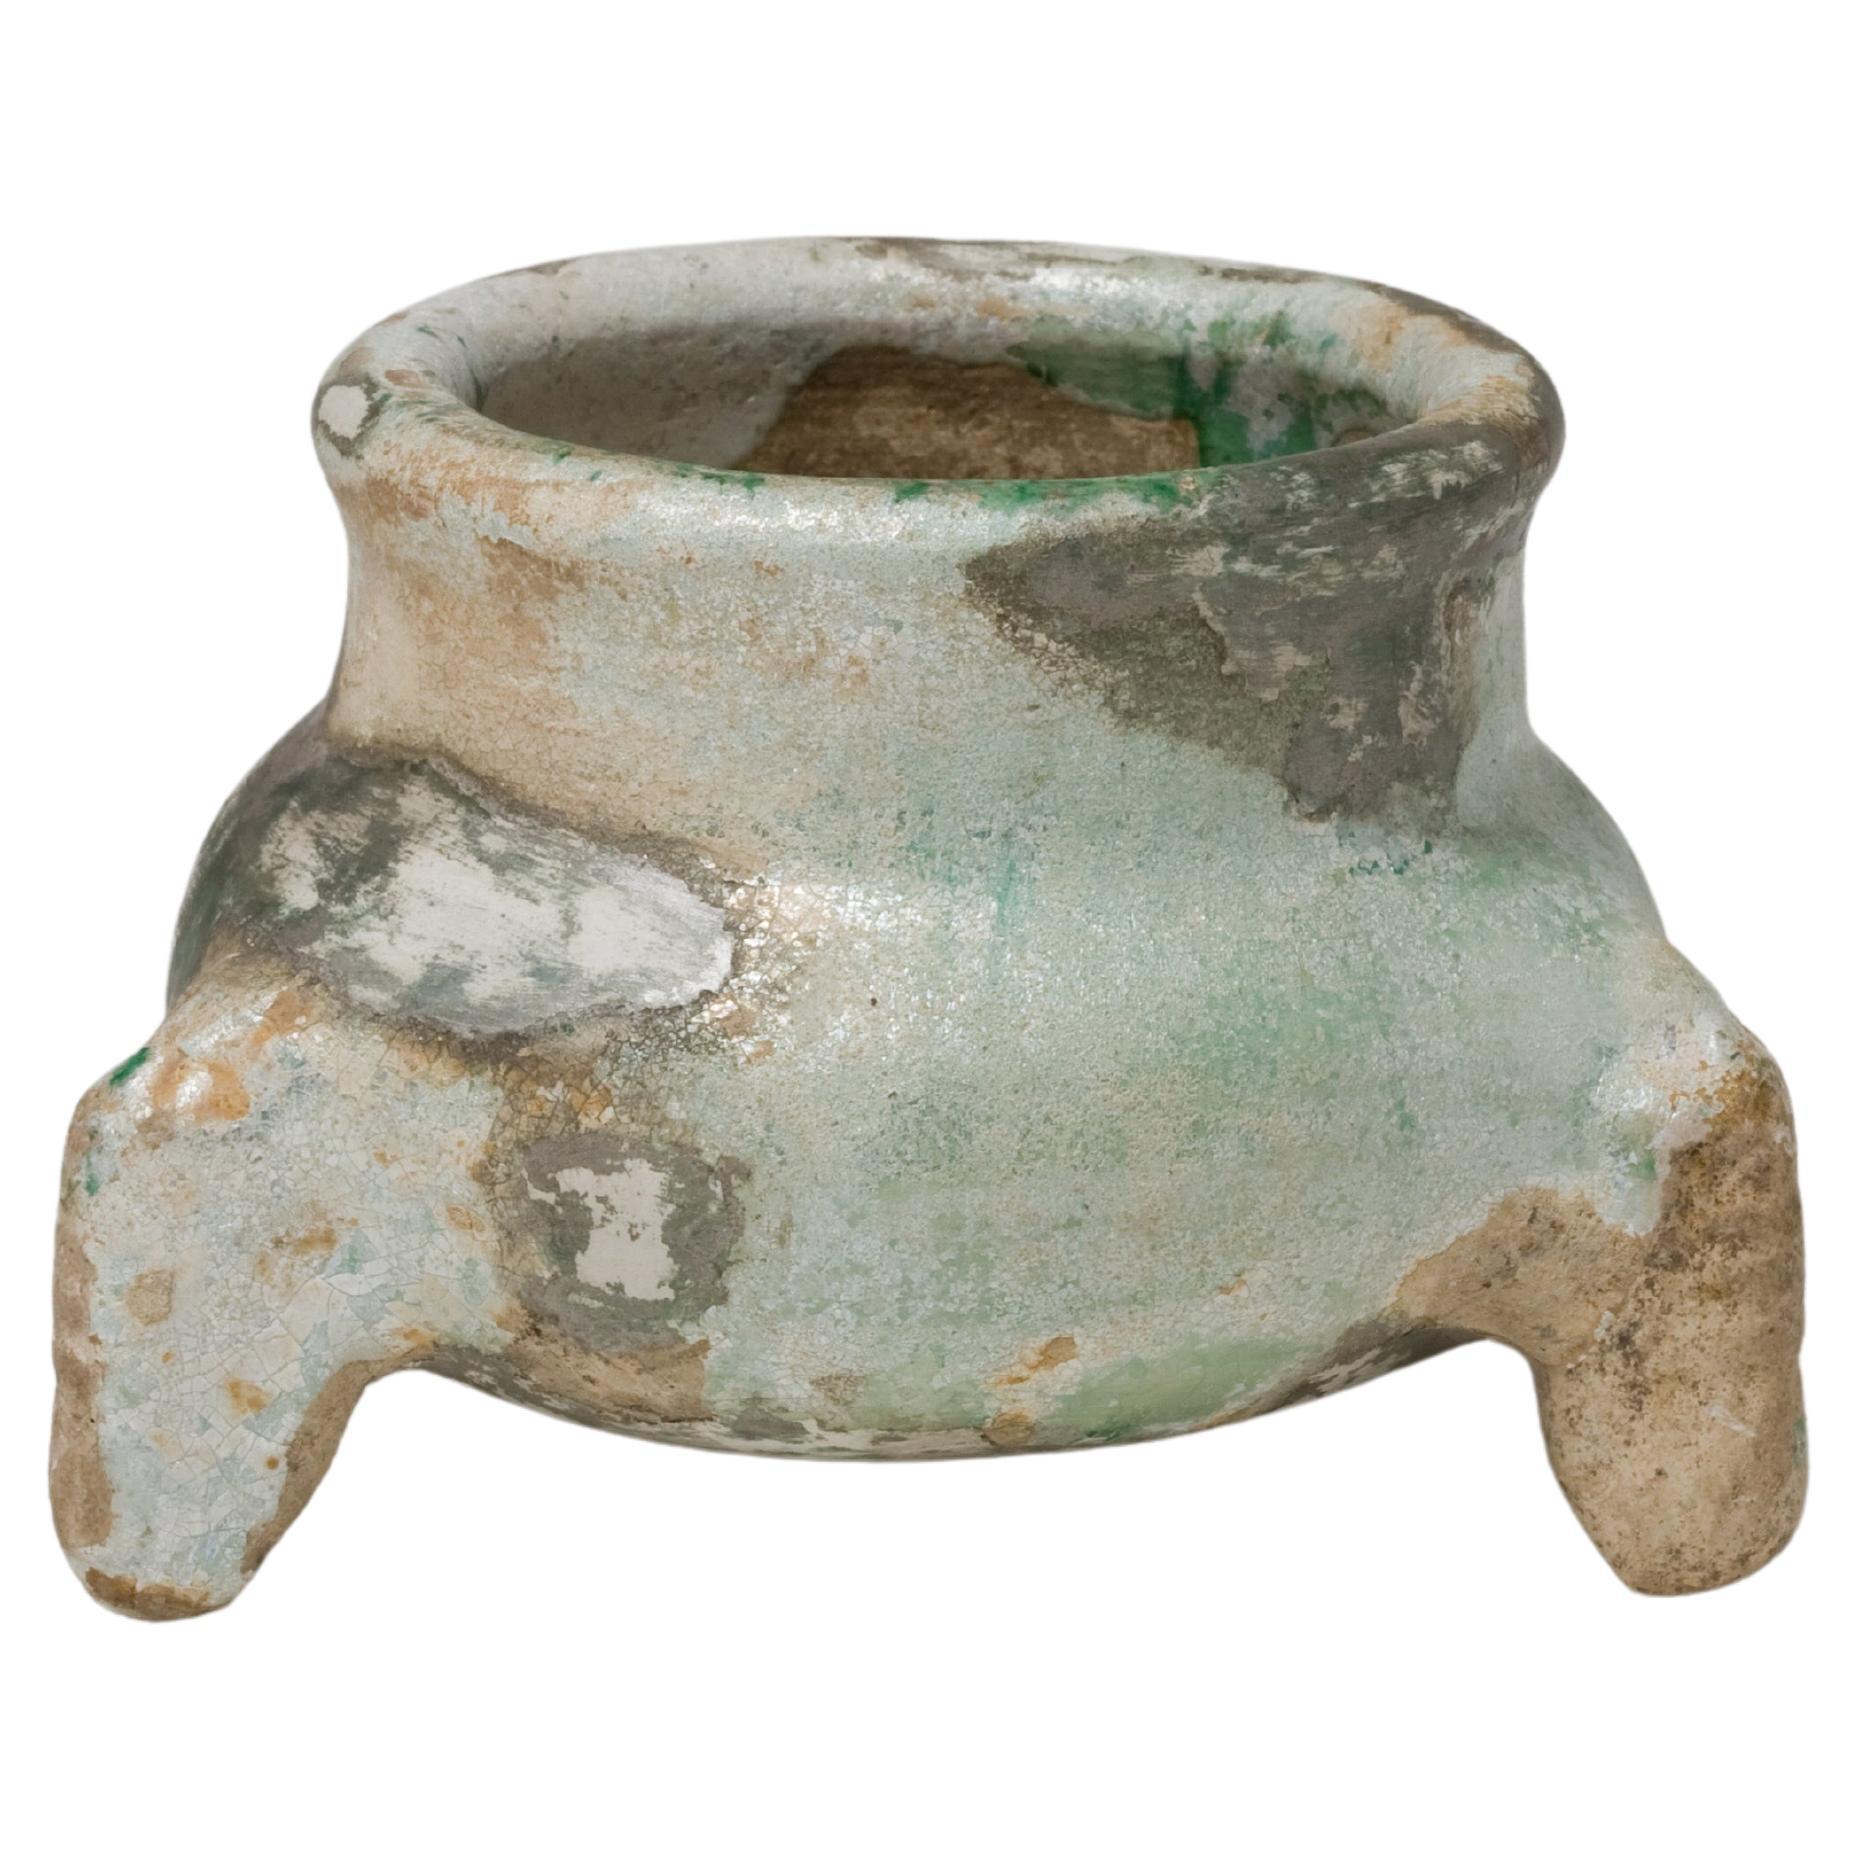 Vase tripode à glaçure verte, Dynastie Han